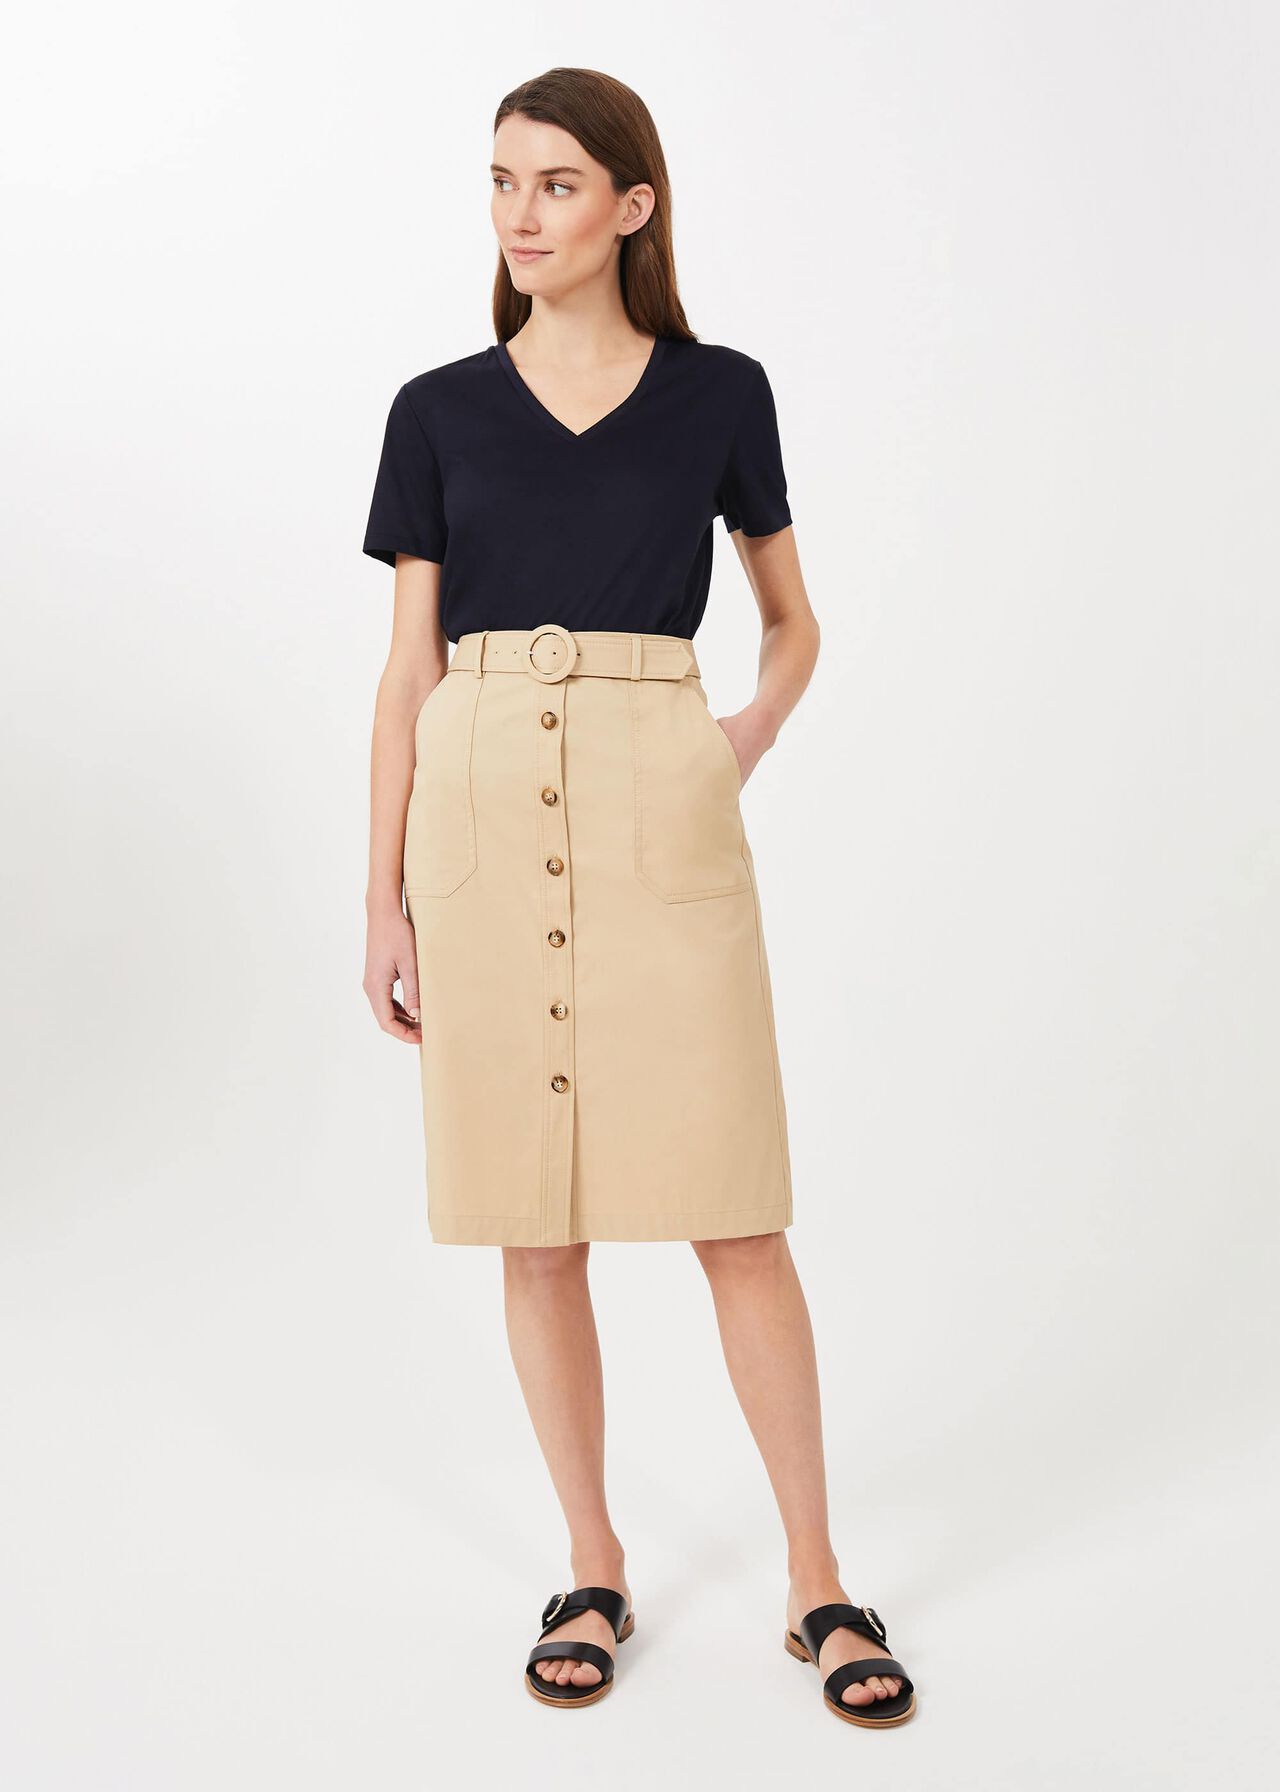 Adaline Skirt, Sand, hi-res